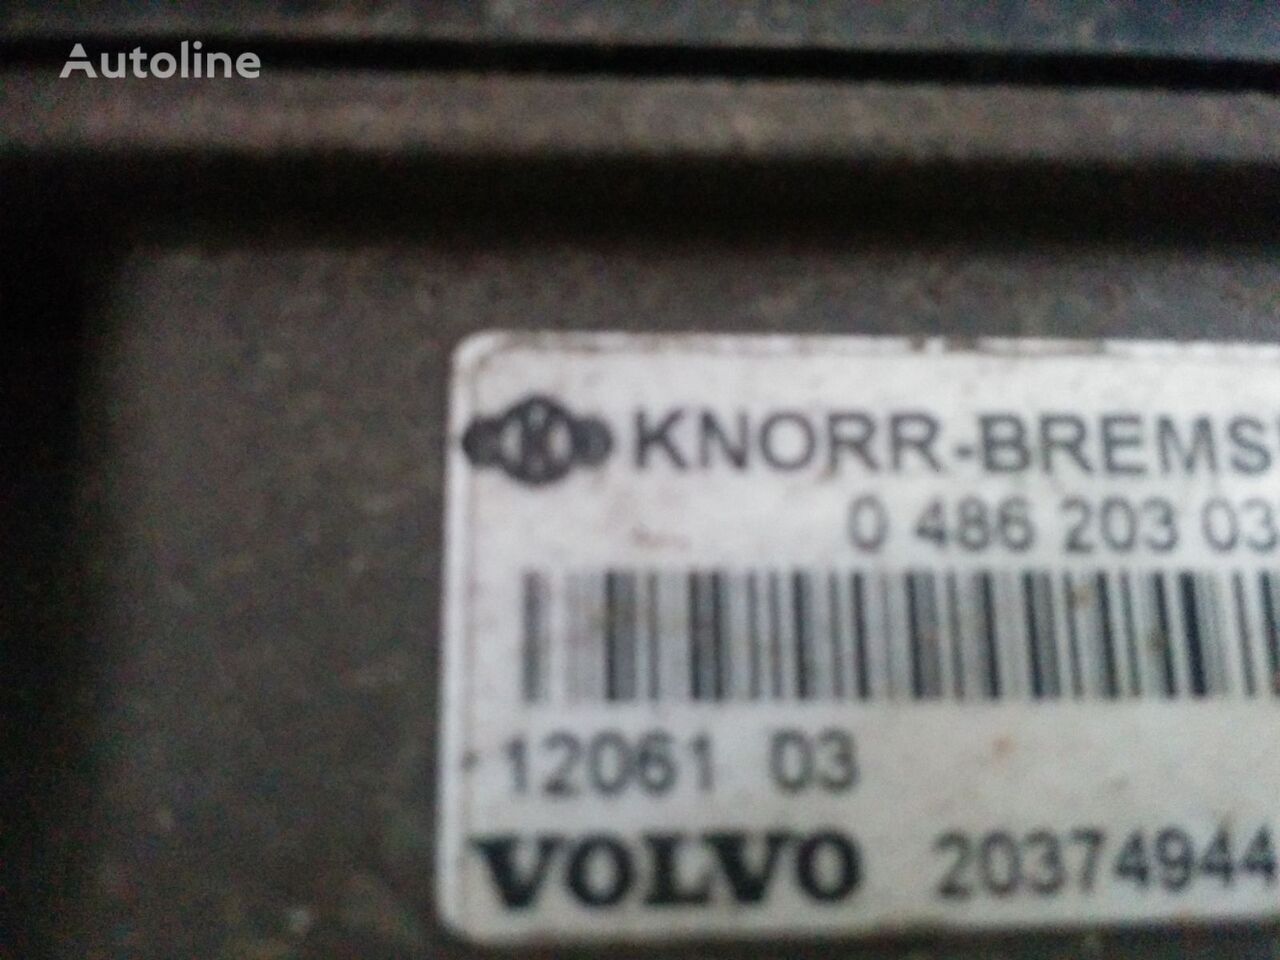 Valve de frein pour Camion Scania Knorr- Bremz 0486203025. 4800010110.486200008.486203033   Scania Volvo: photos 12